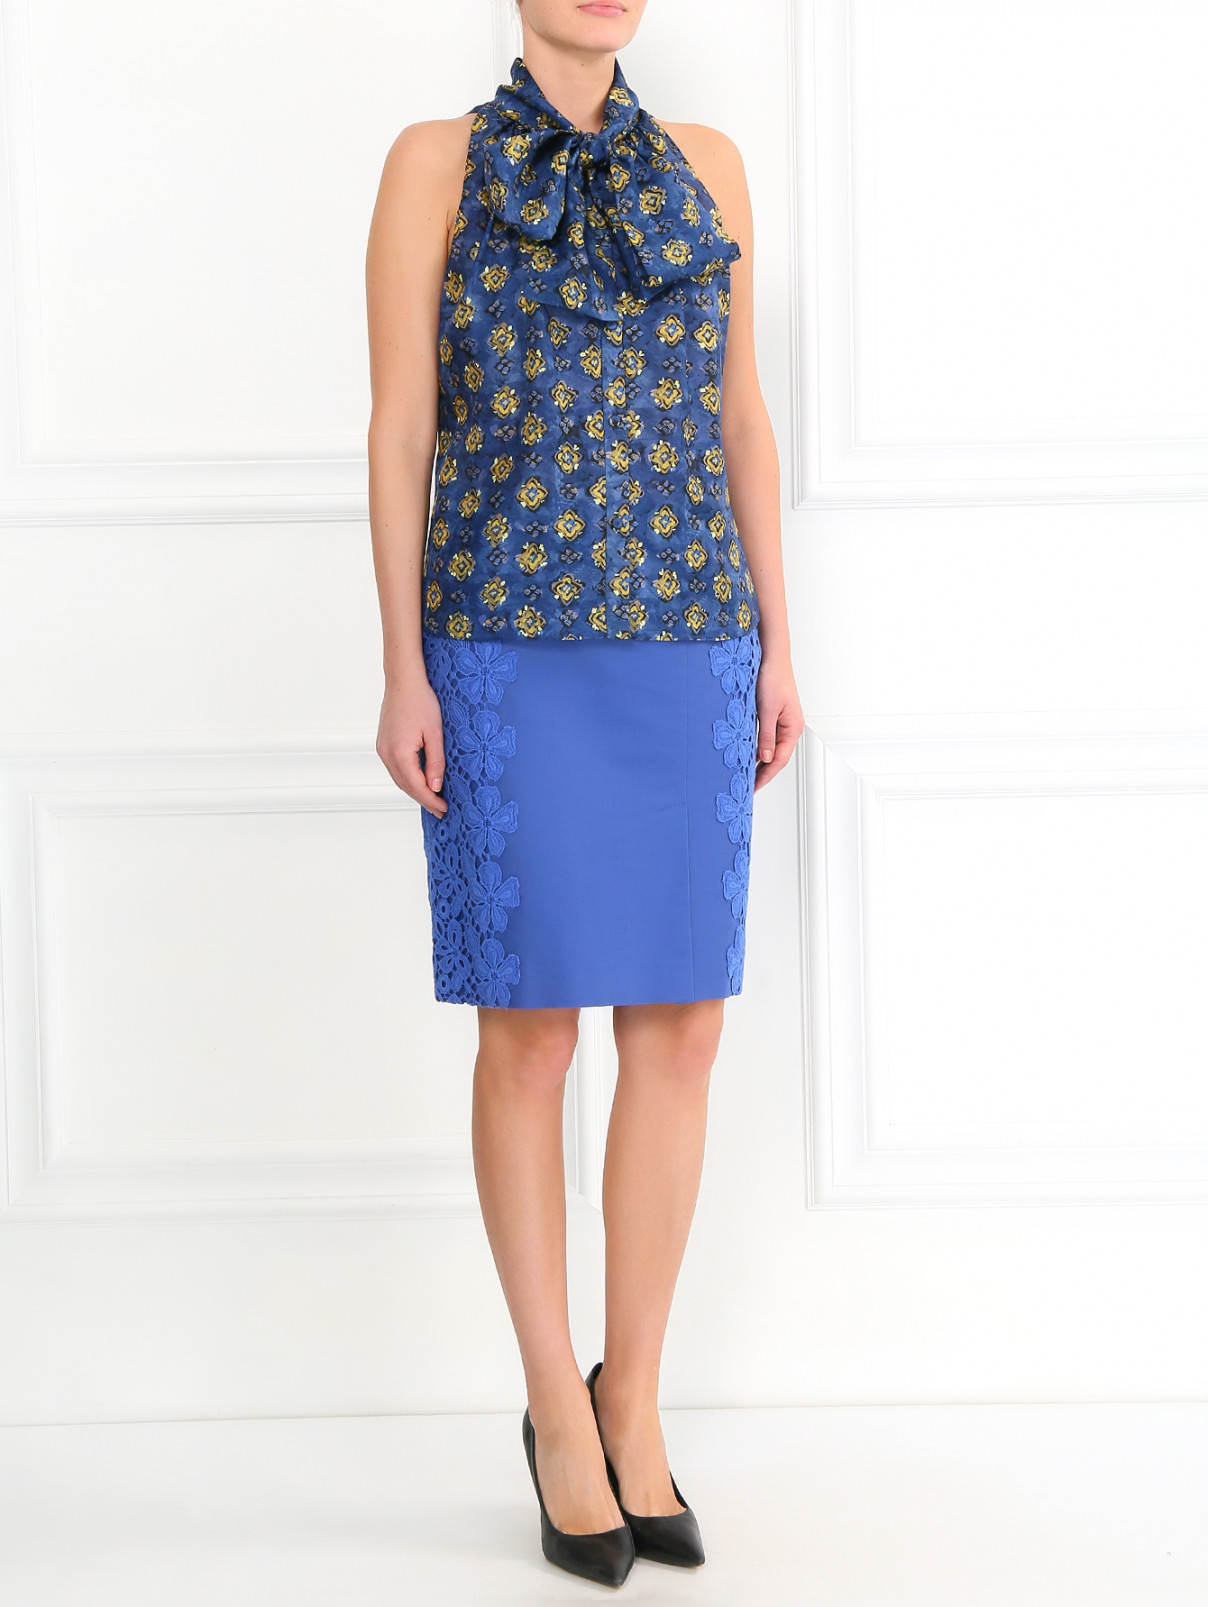 Шелковая блуза с узором Alberta Ferretti  –  Модель Общий вид  – Цвет:  Узор